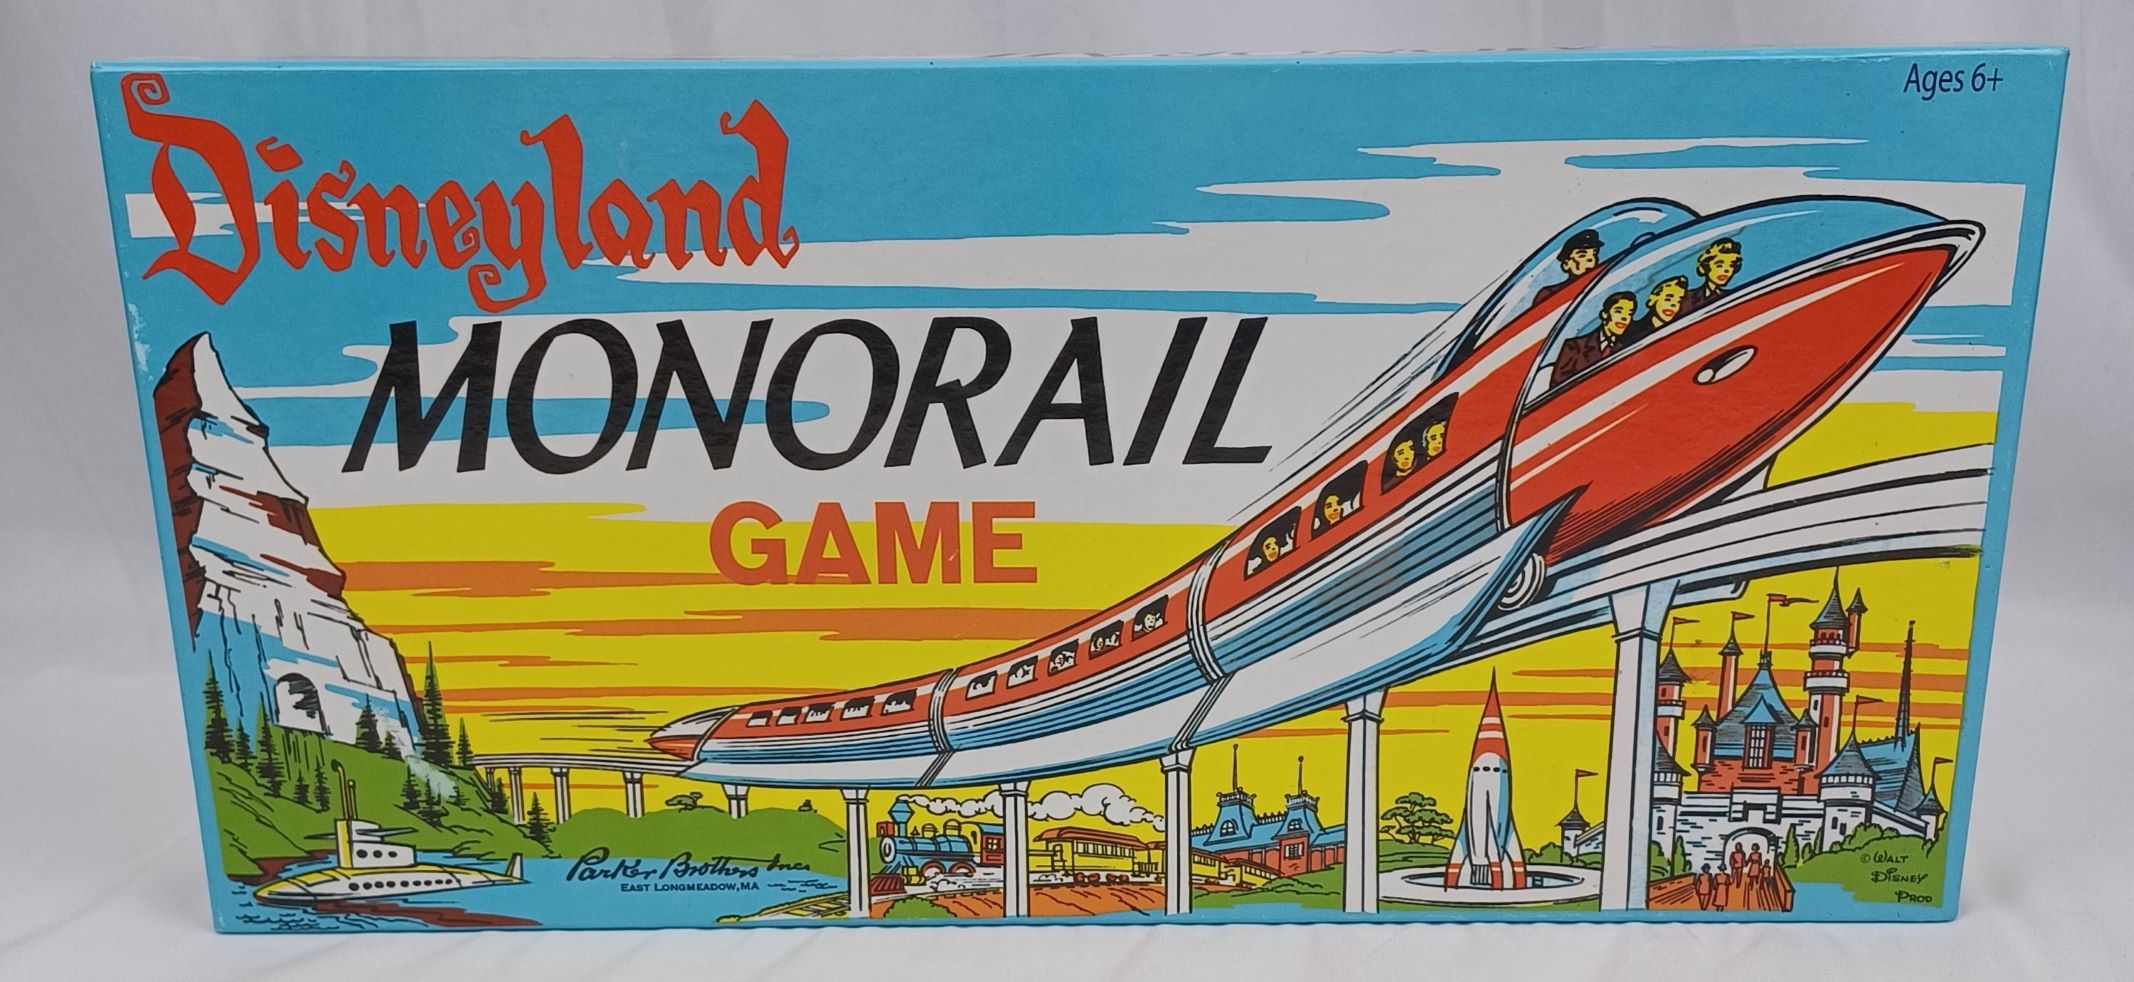 Box for Disneyland Monorail Game